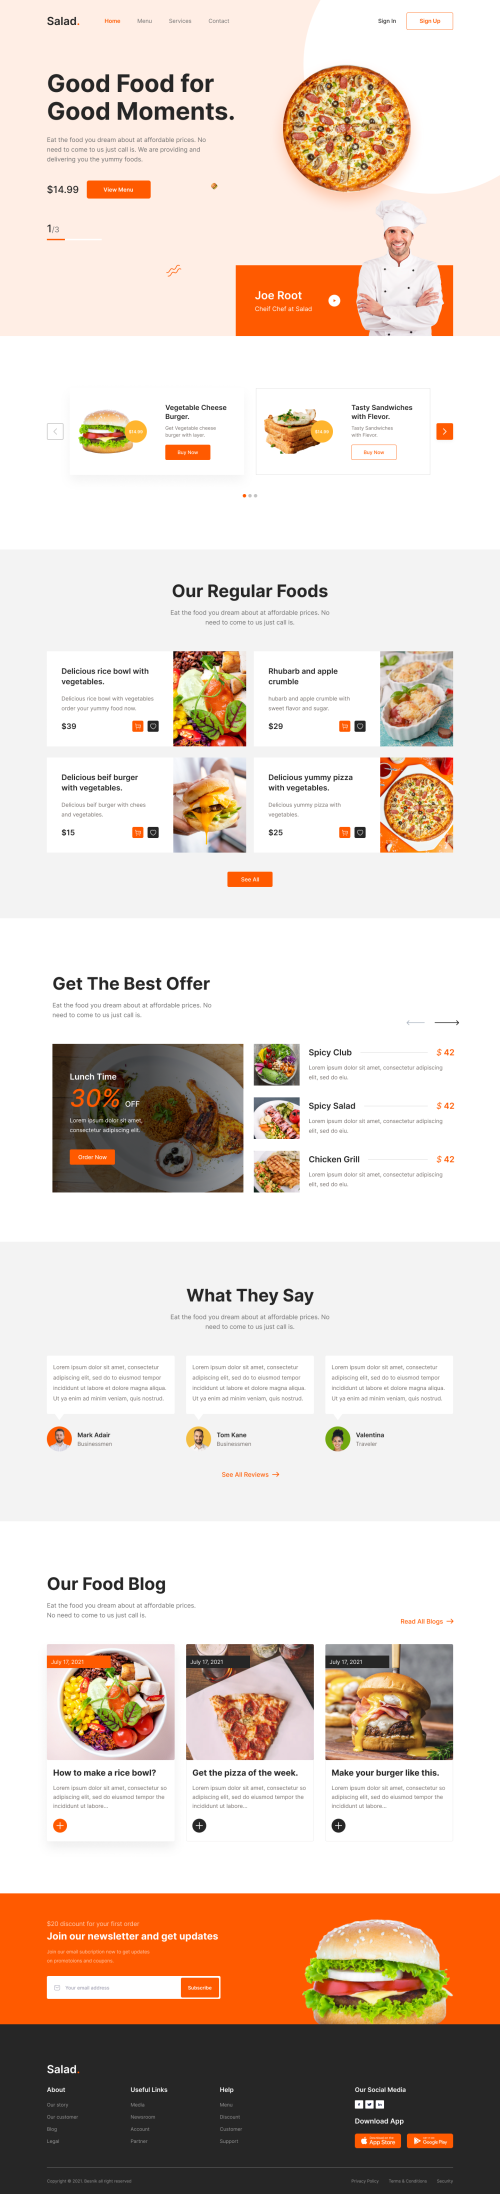 UIHut - Salad Food Delivery Website - 12153